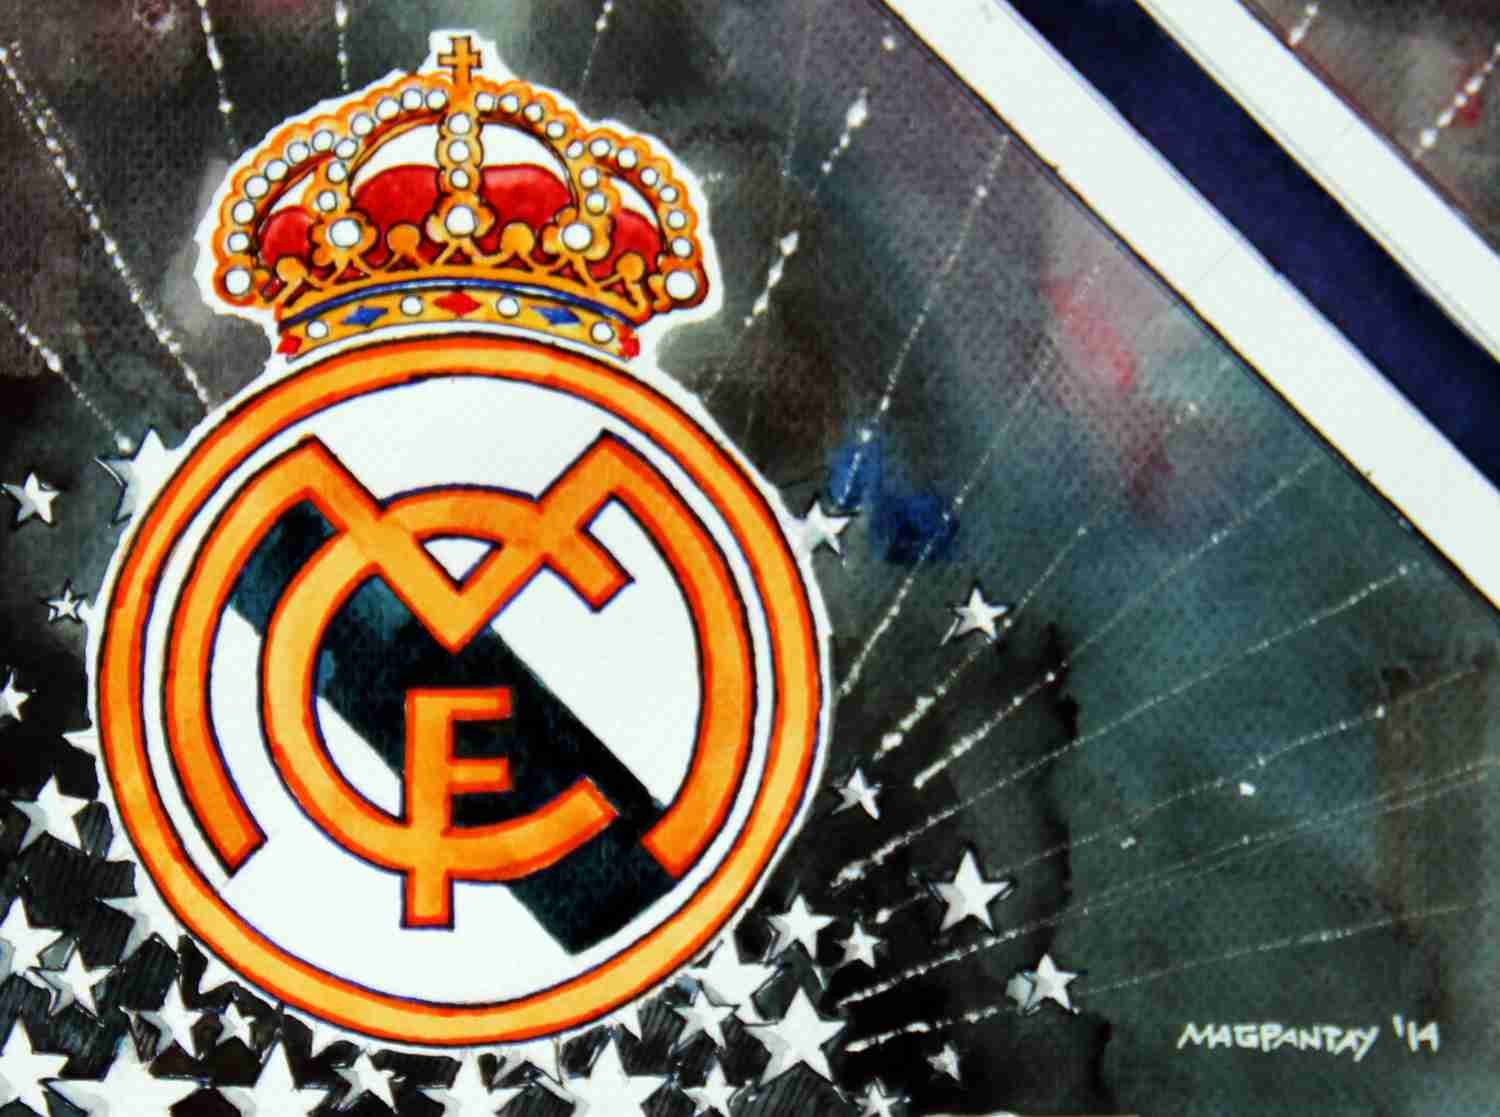 _Real Madrid - Wappen mit Farben